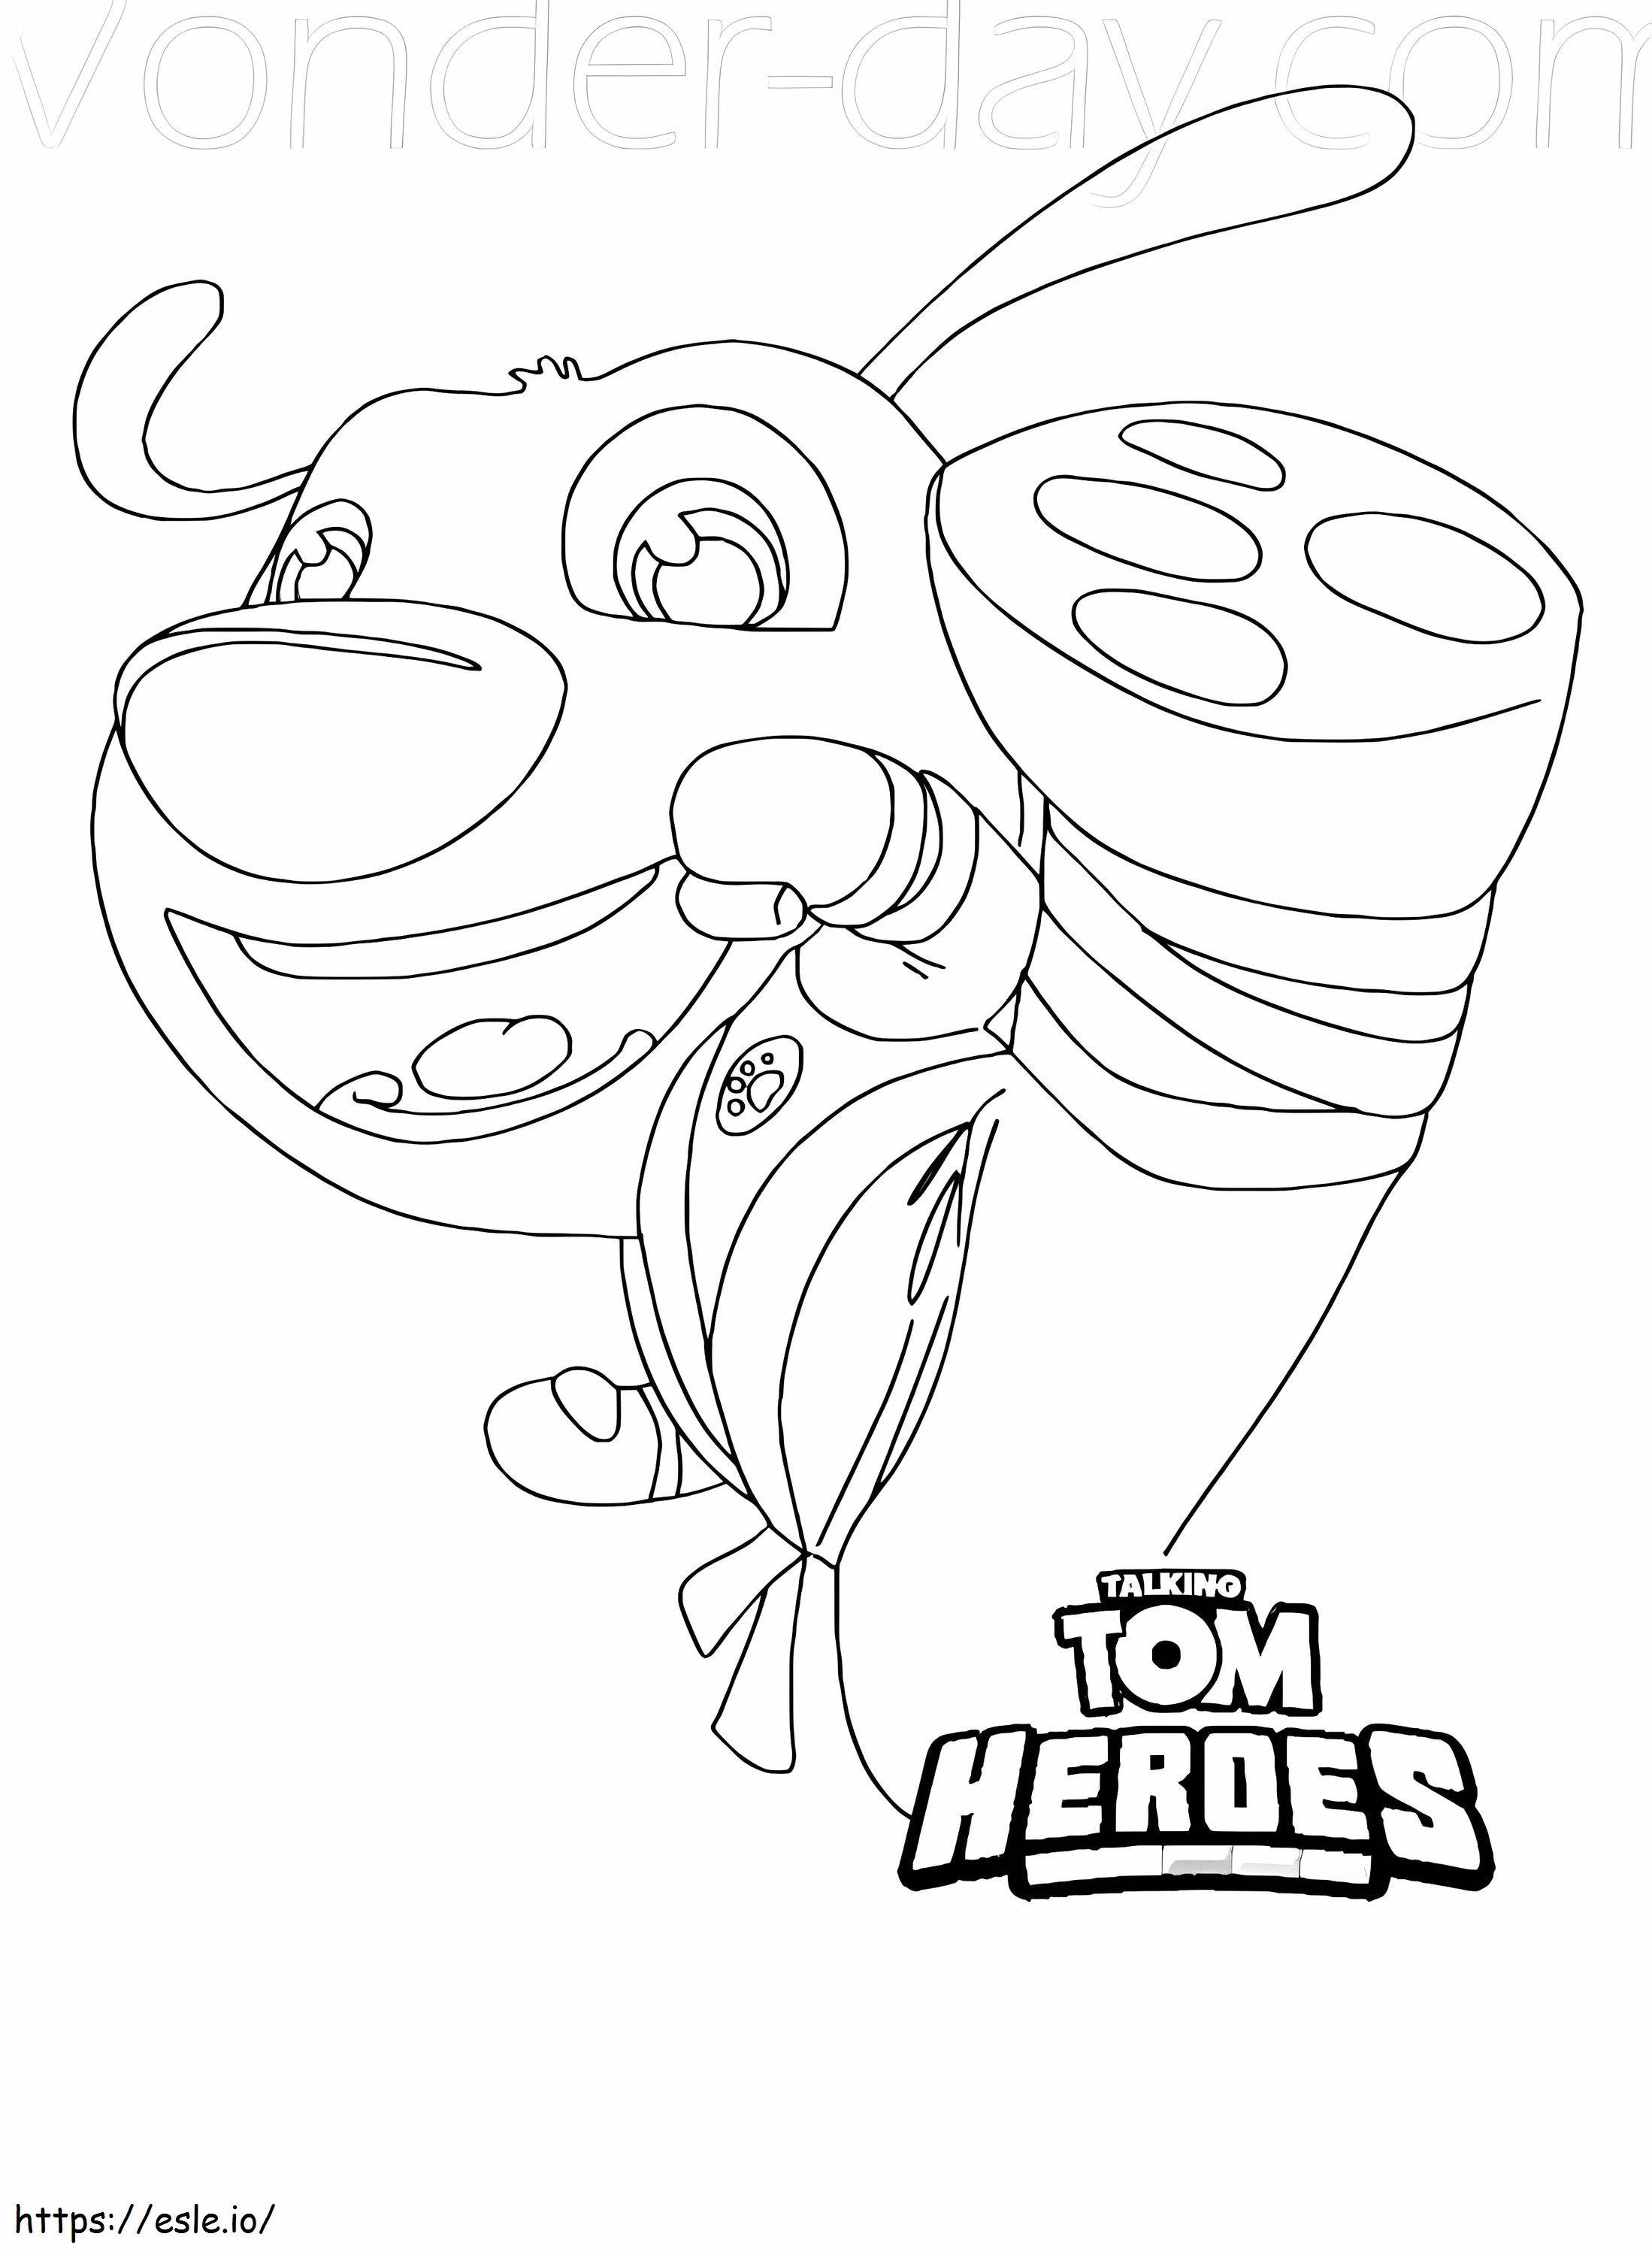 Hank din Talking Tom Heroes de colorat